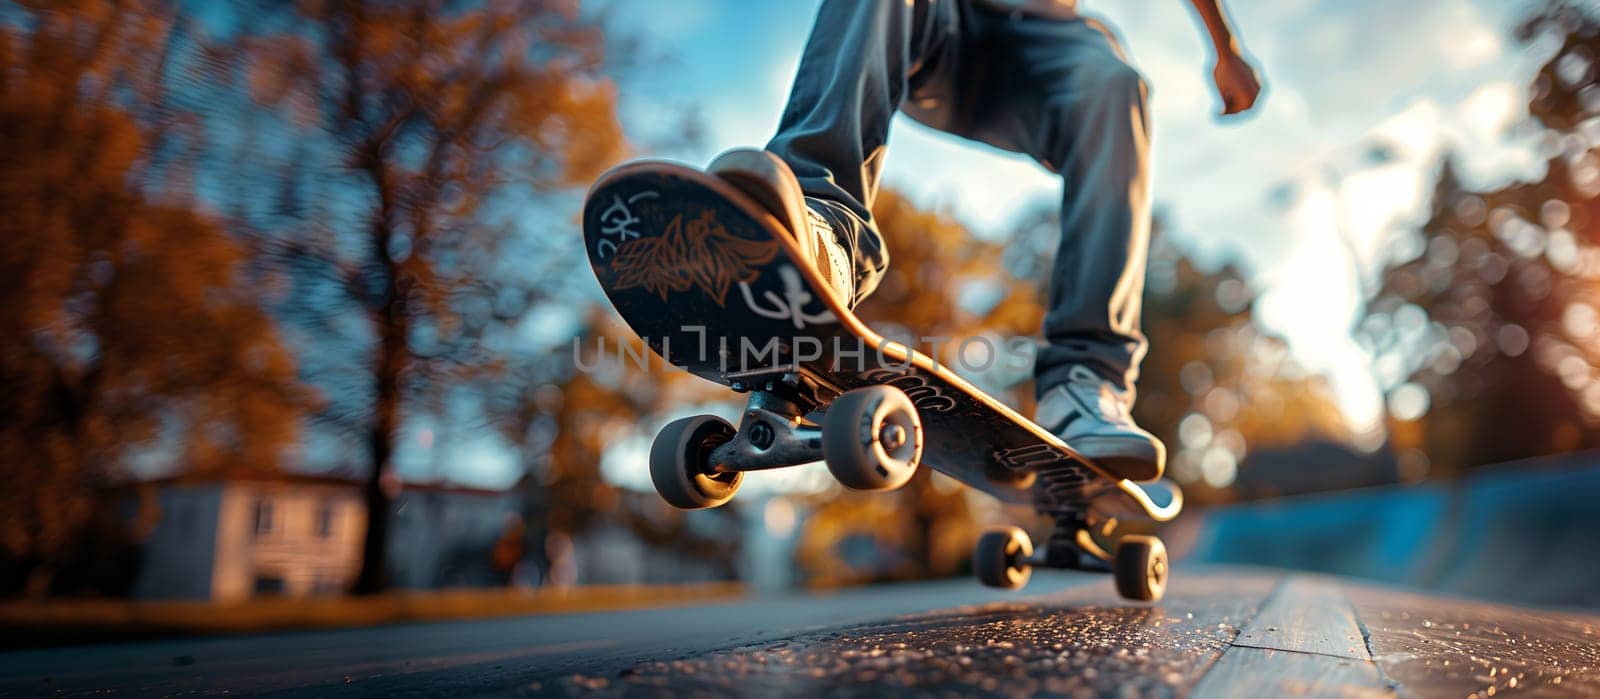 Skateboarder Performing Trick at Golden Hour in Urban Skatepark by chrisroll